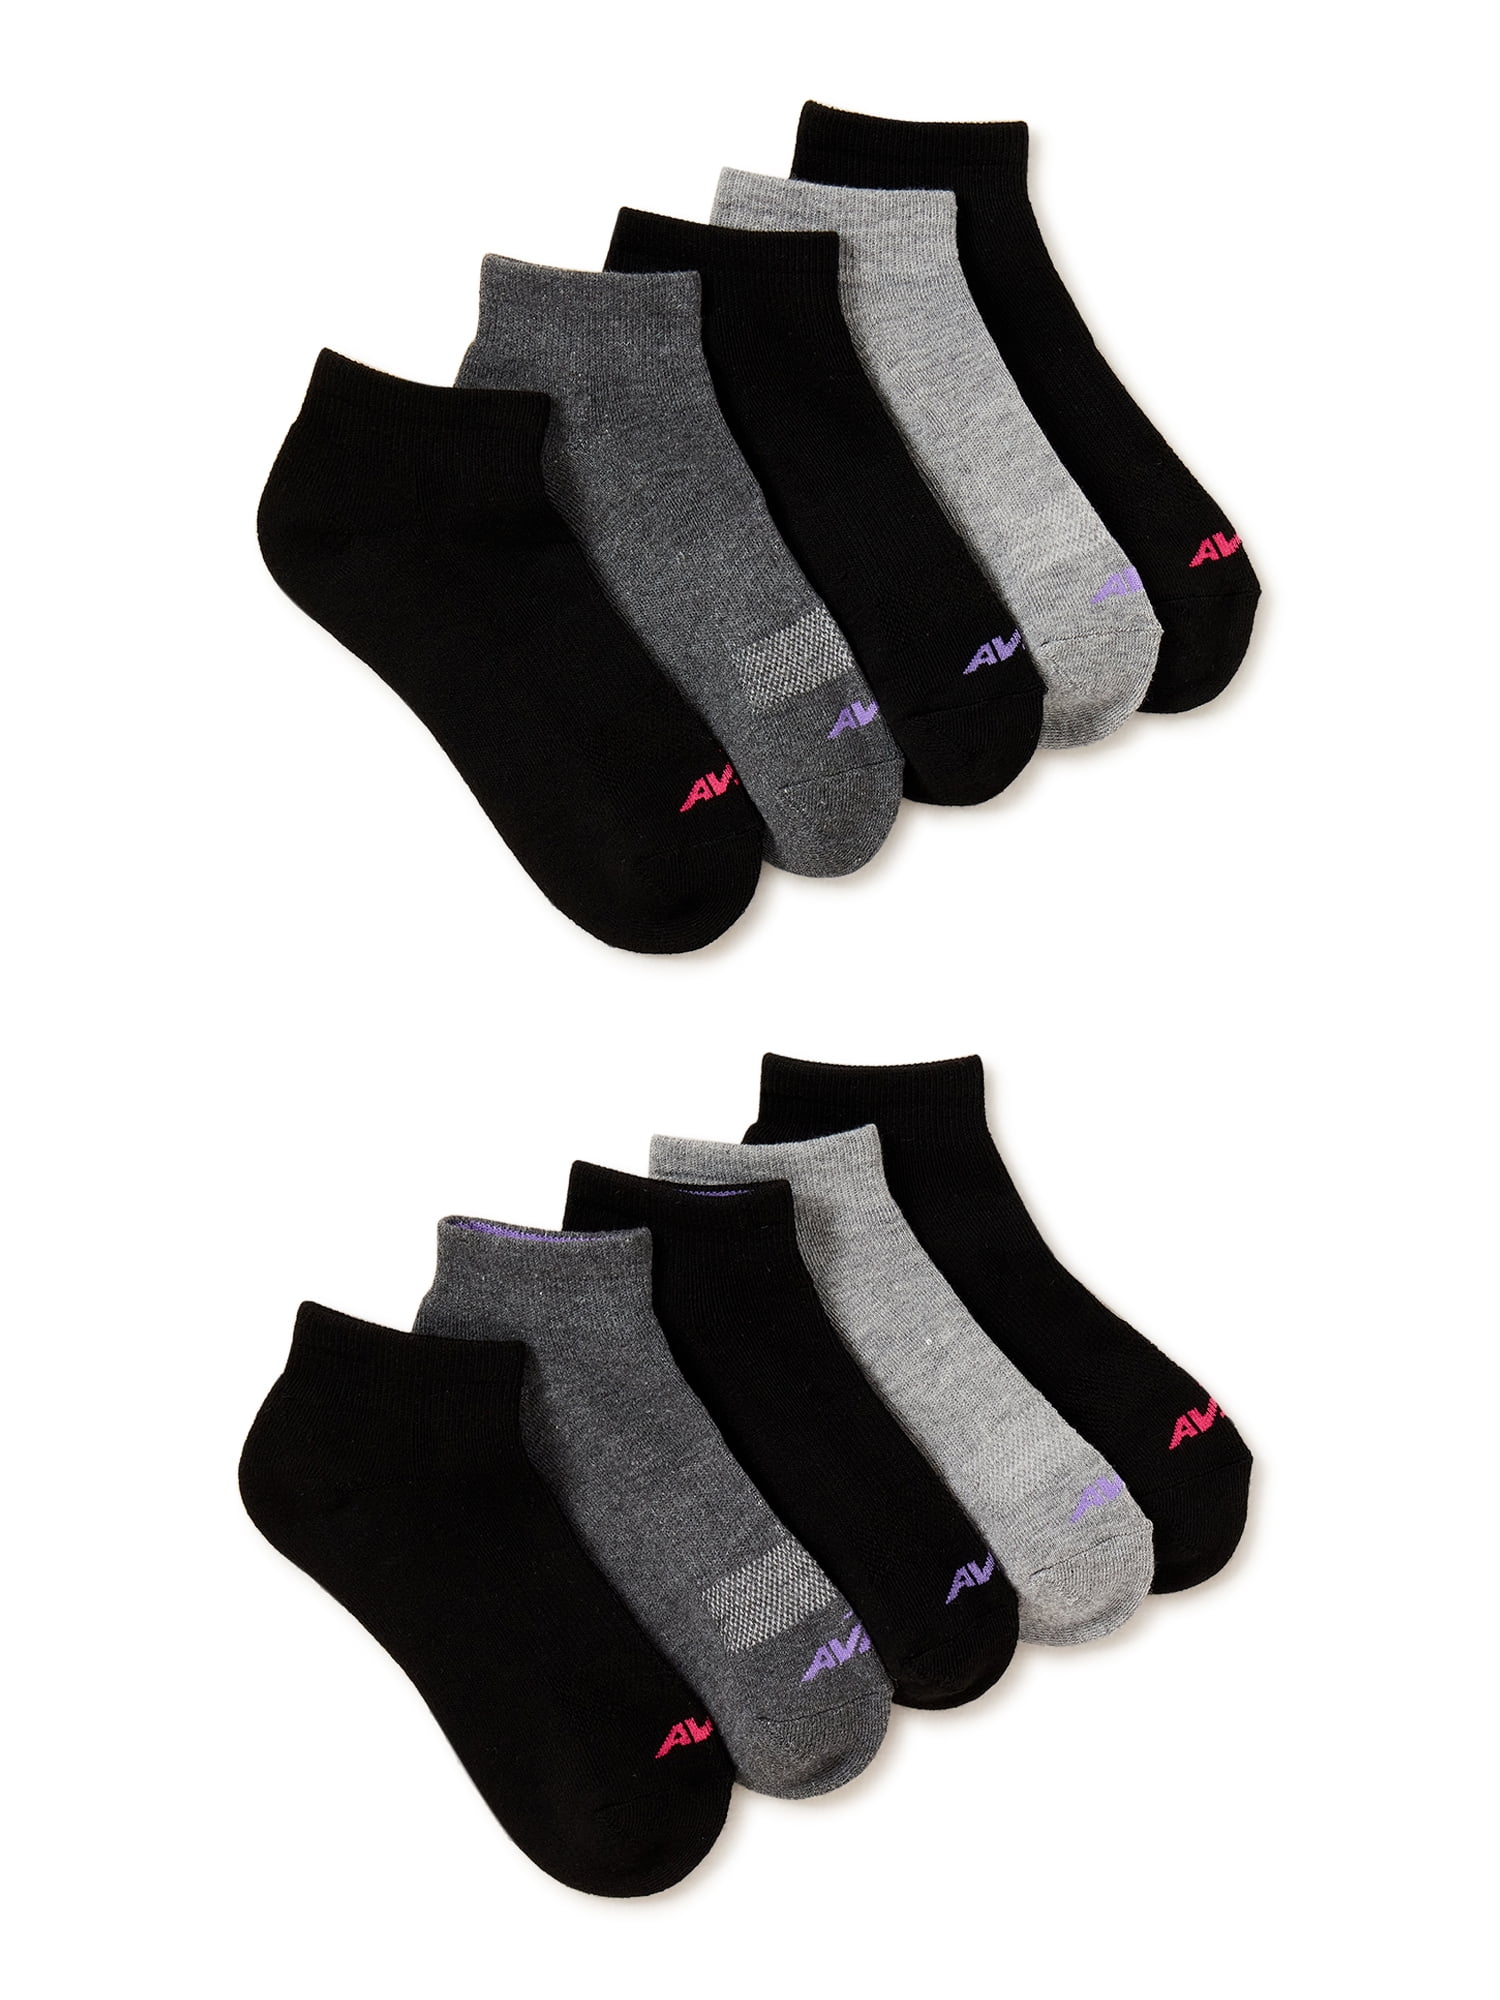 Avia Women's Performance Comfort Cuff No Show Liner Socks, 10-Pack - Walmart .com